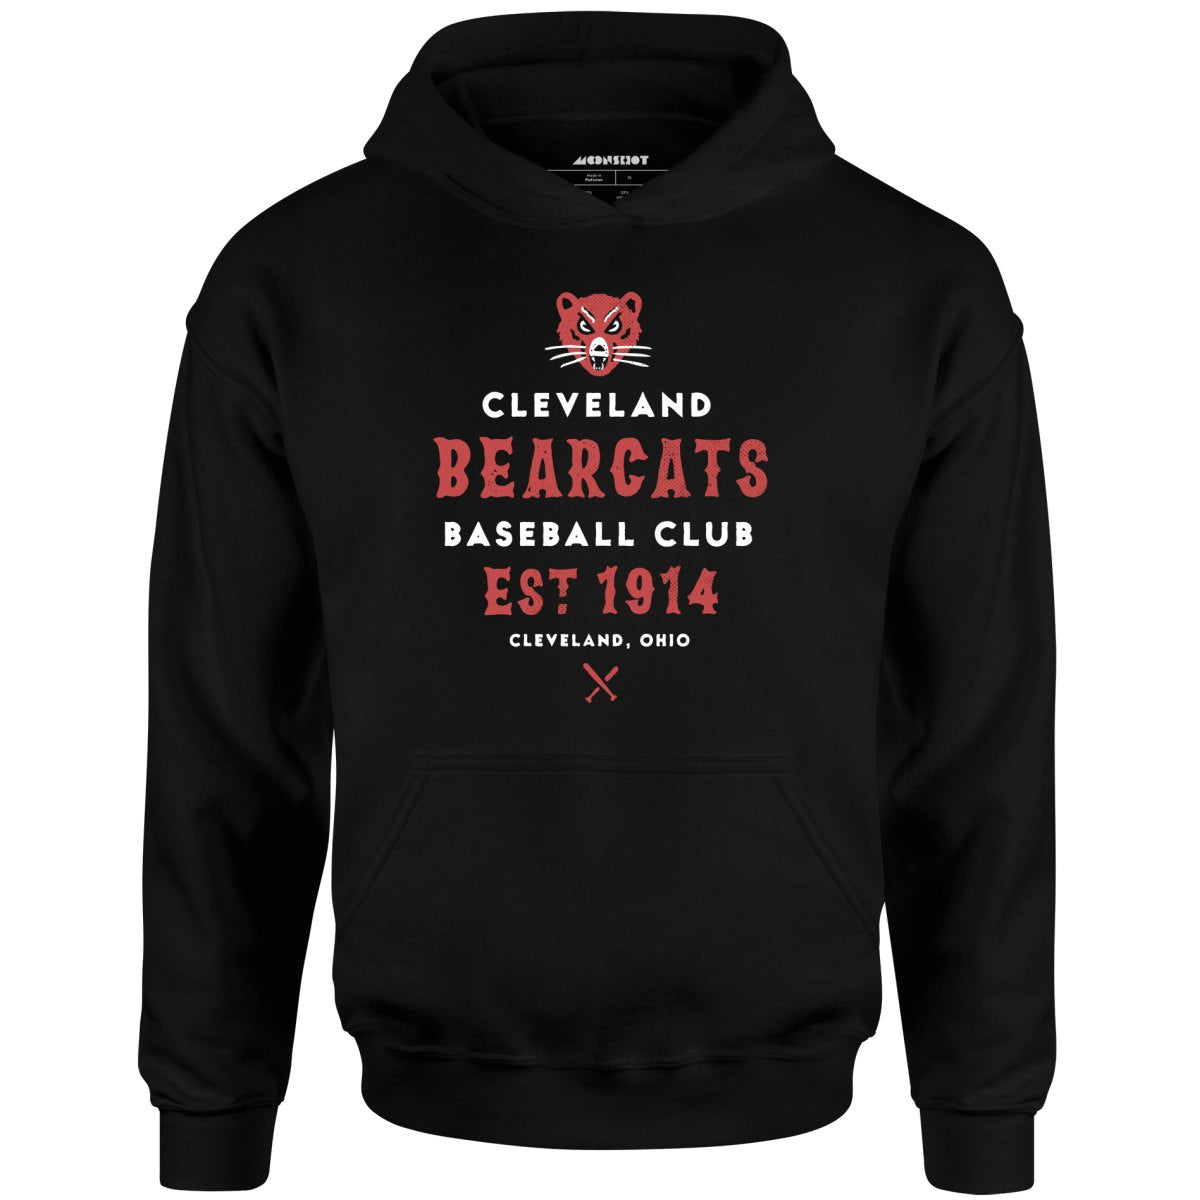 Cleveland Bearcats - Ohio - Vintage Defunct Baseball Teams - Unisex Hoodie